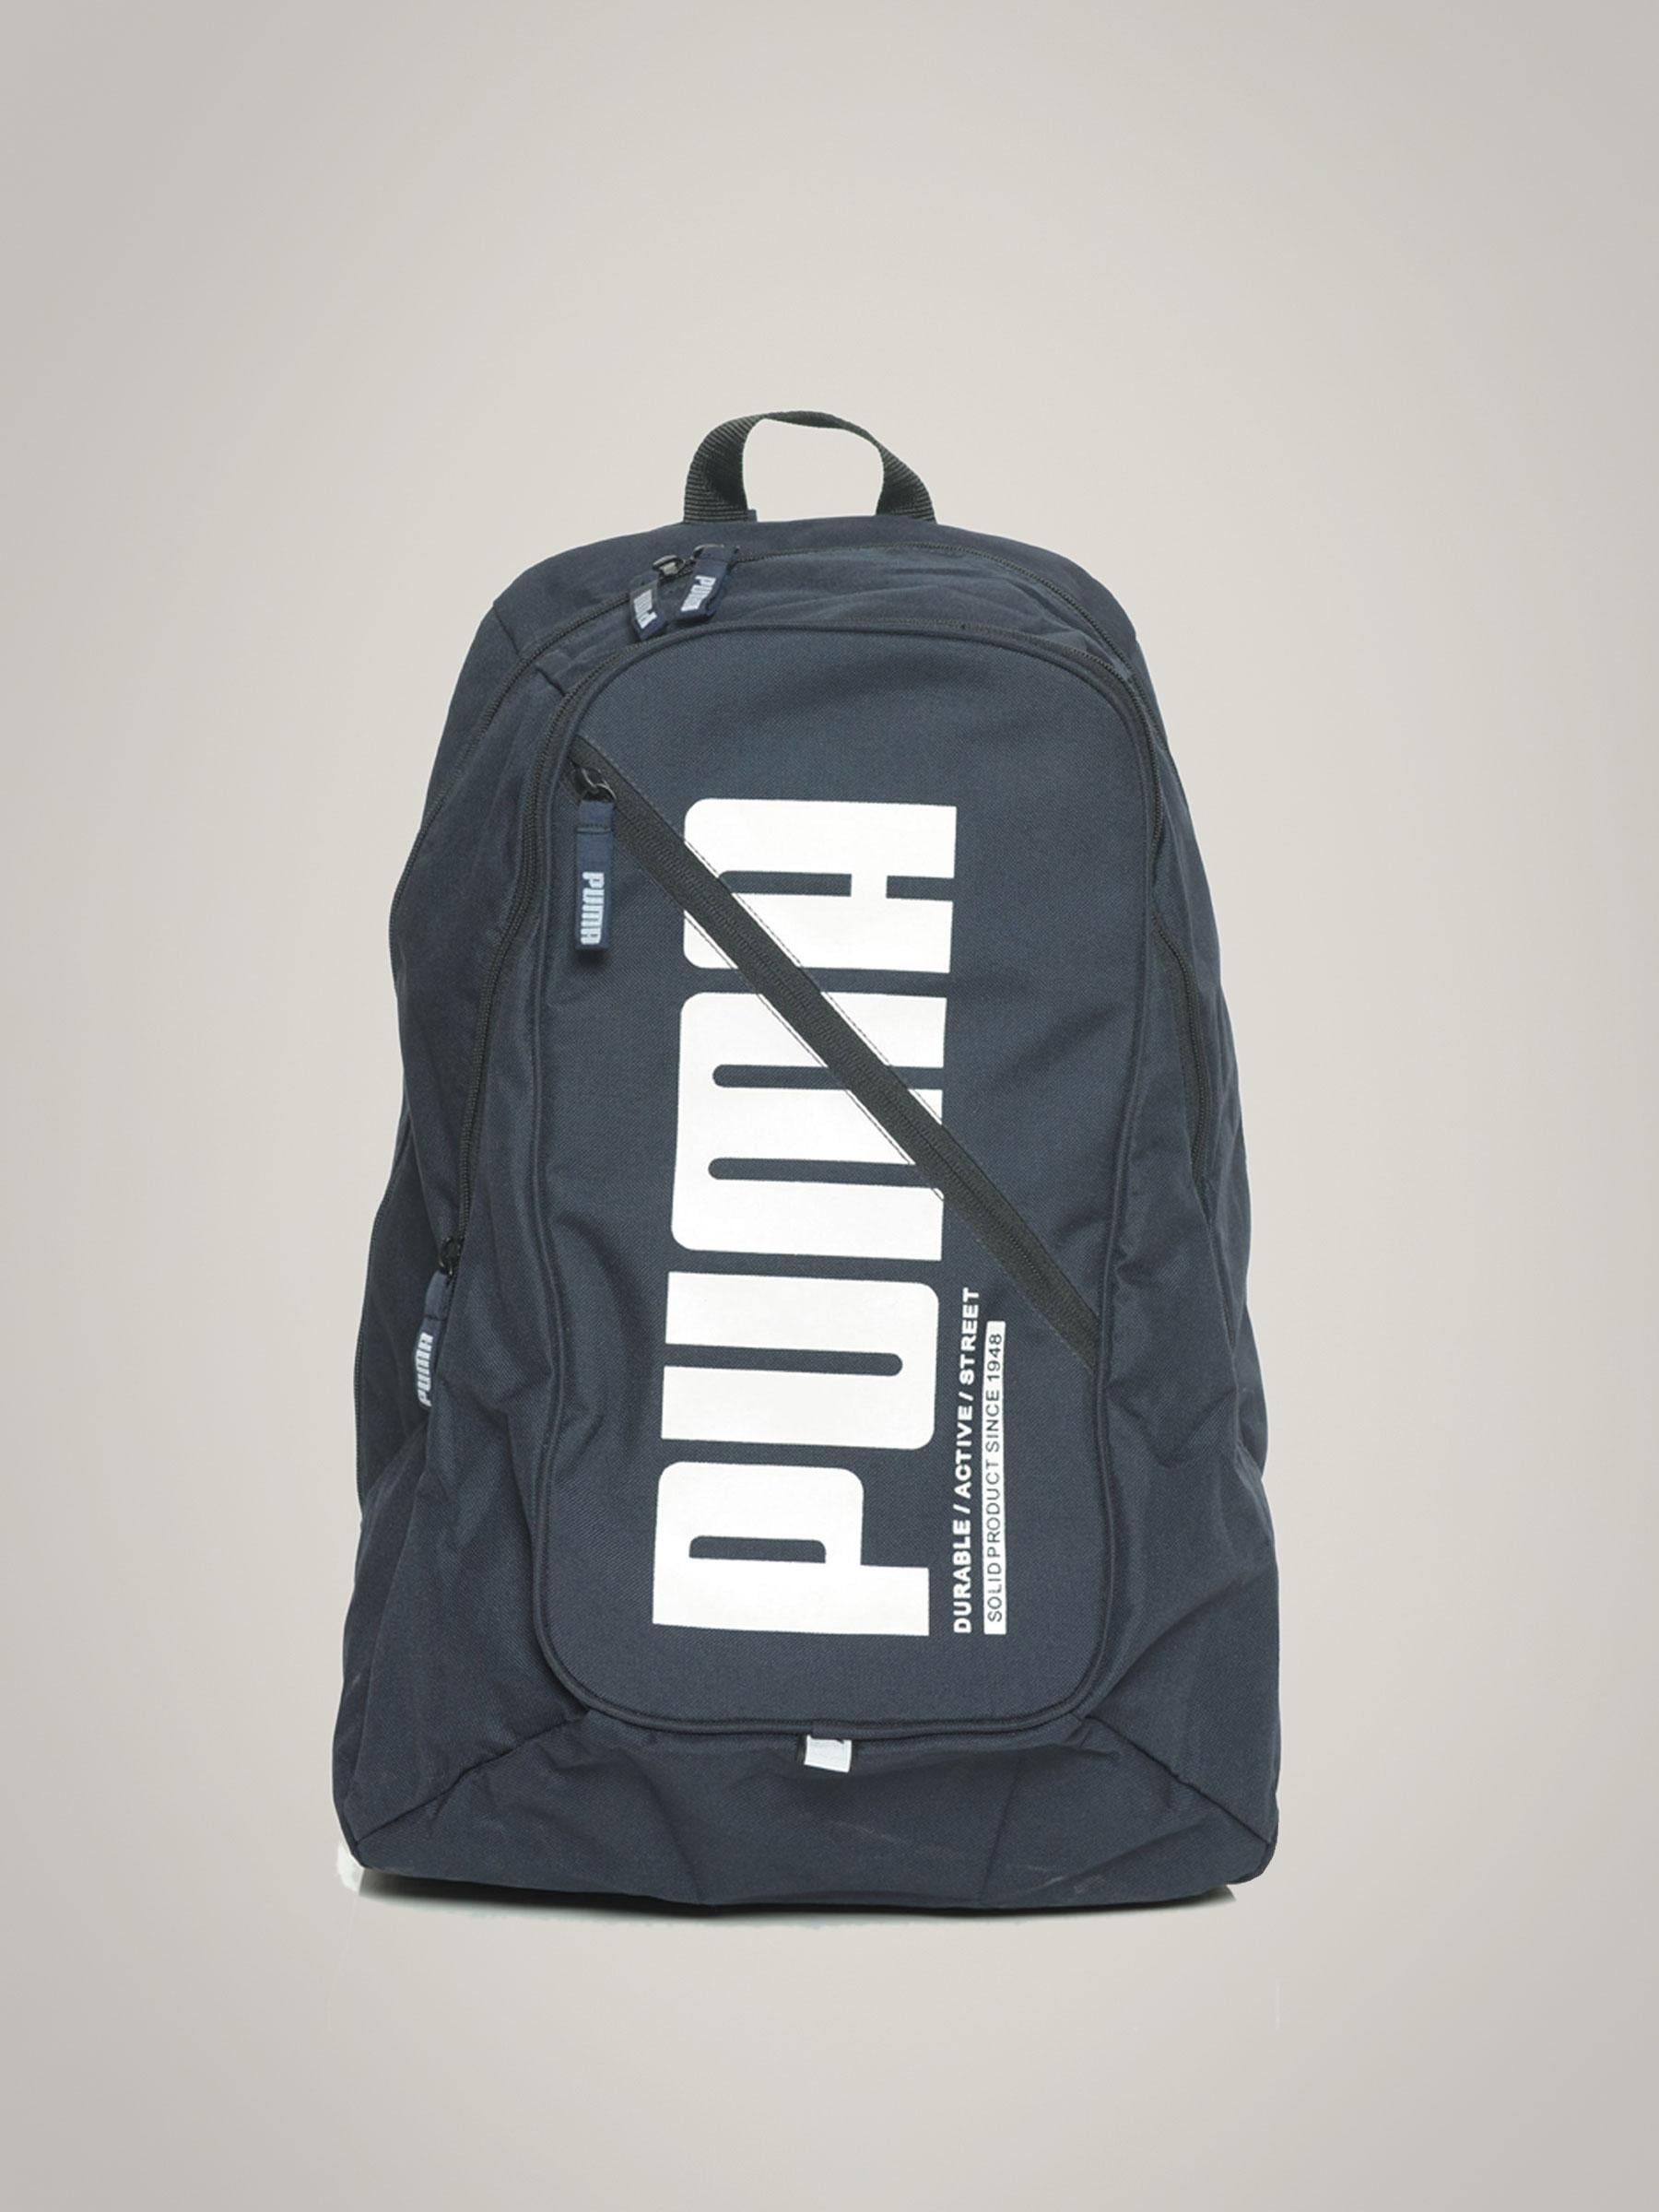 Puma Deck Navy Blue Backpack